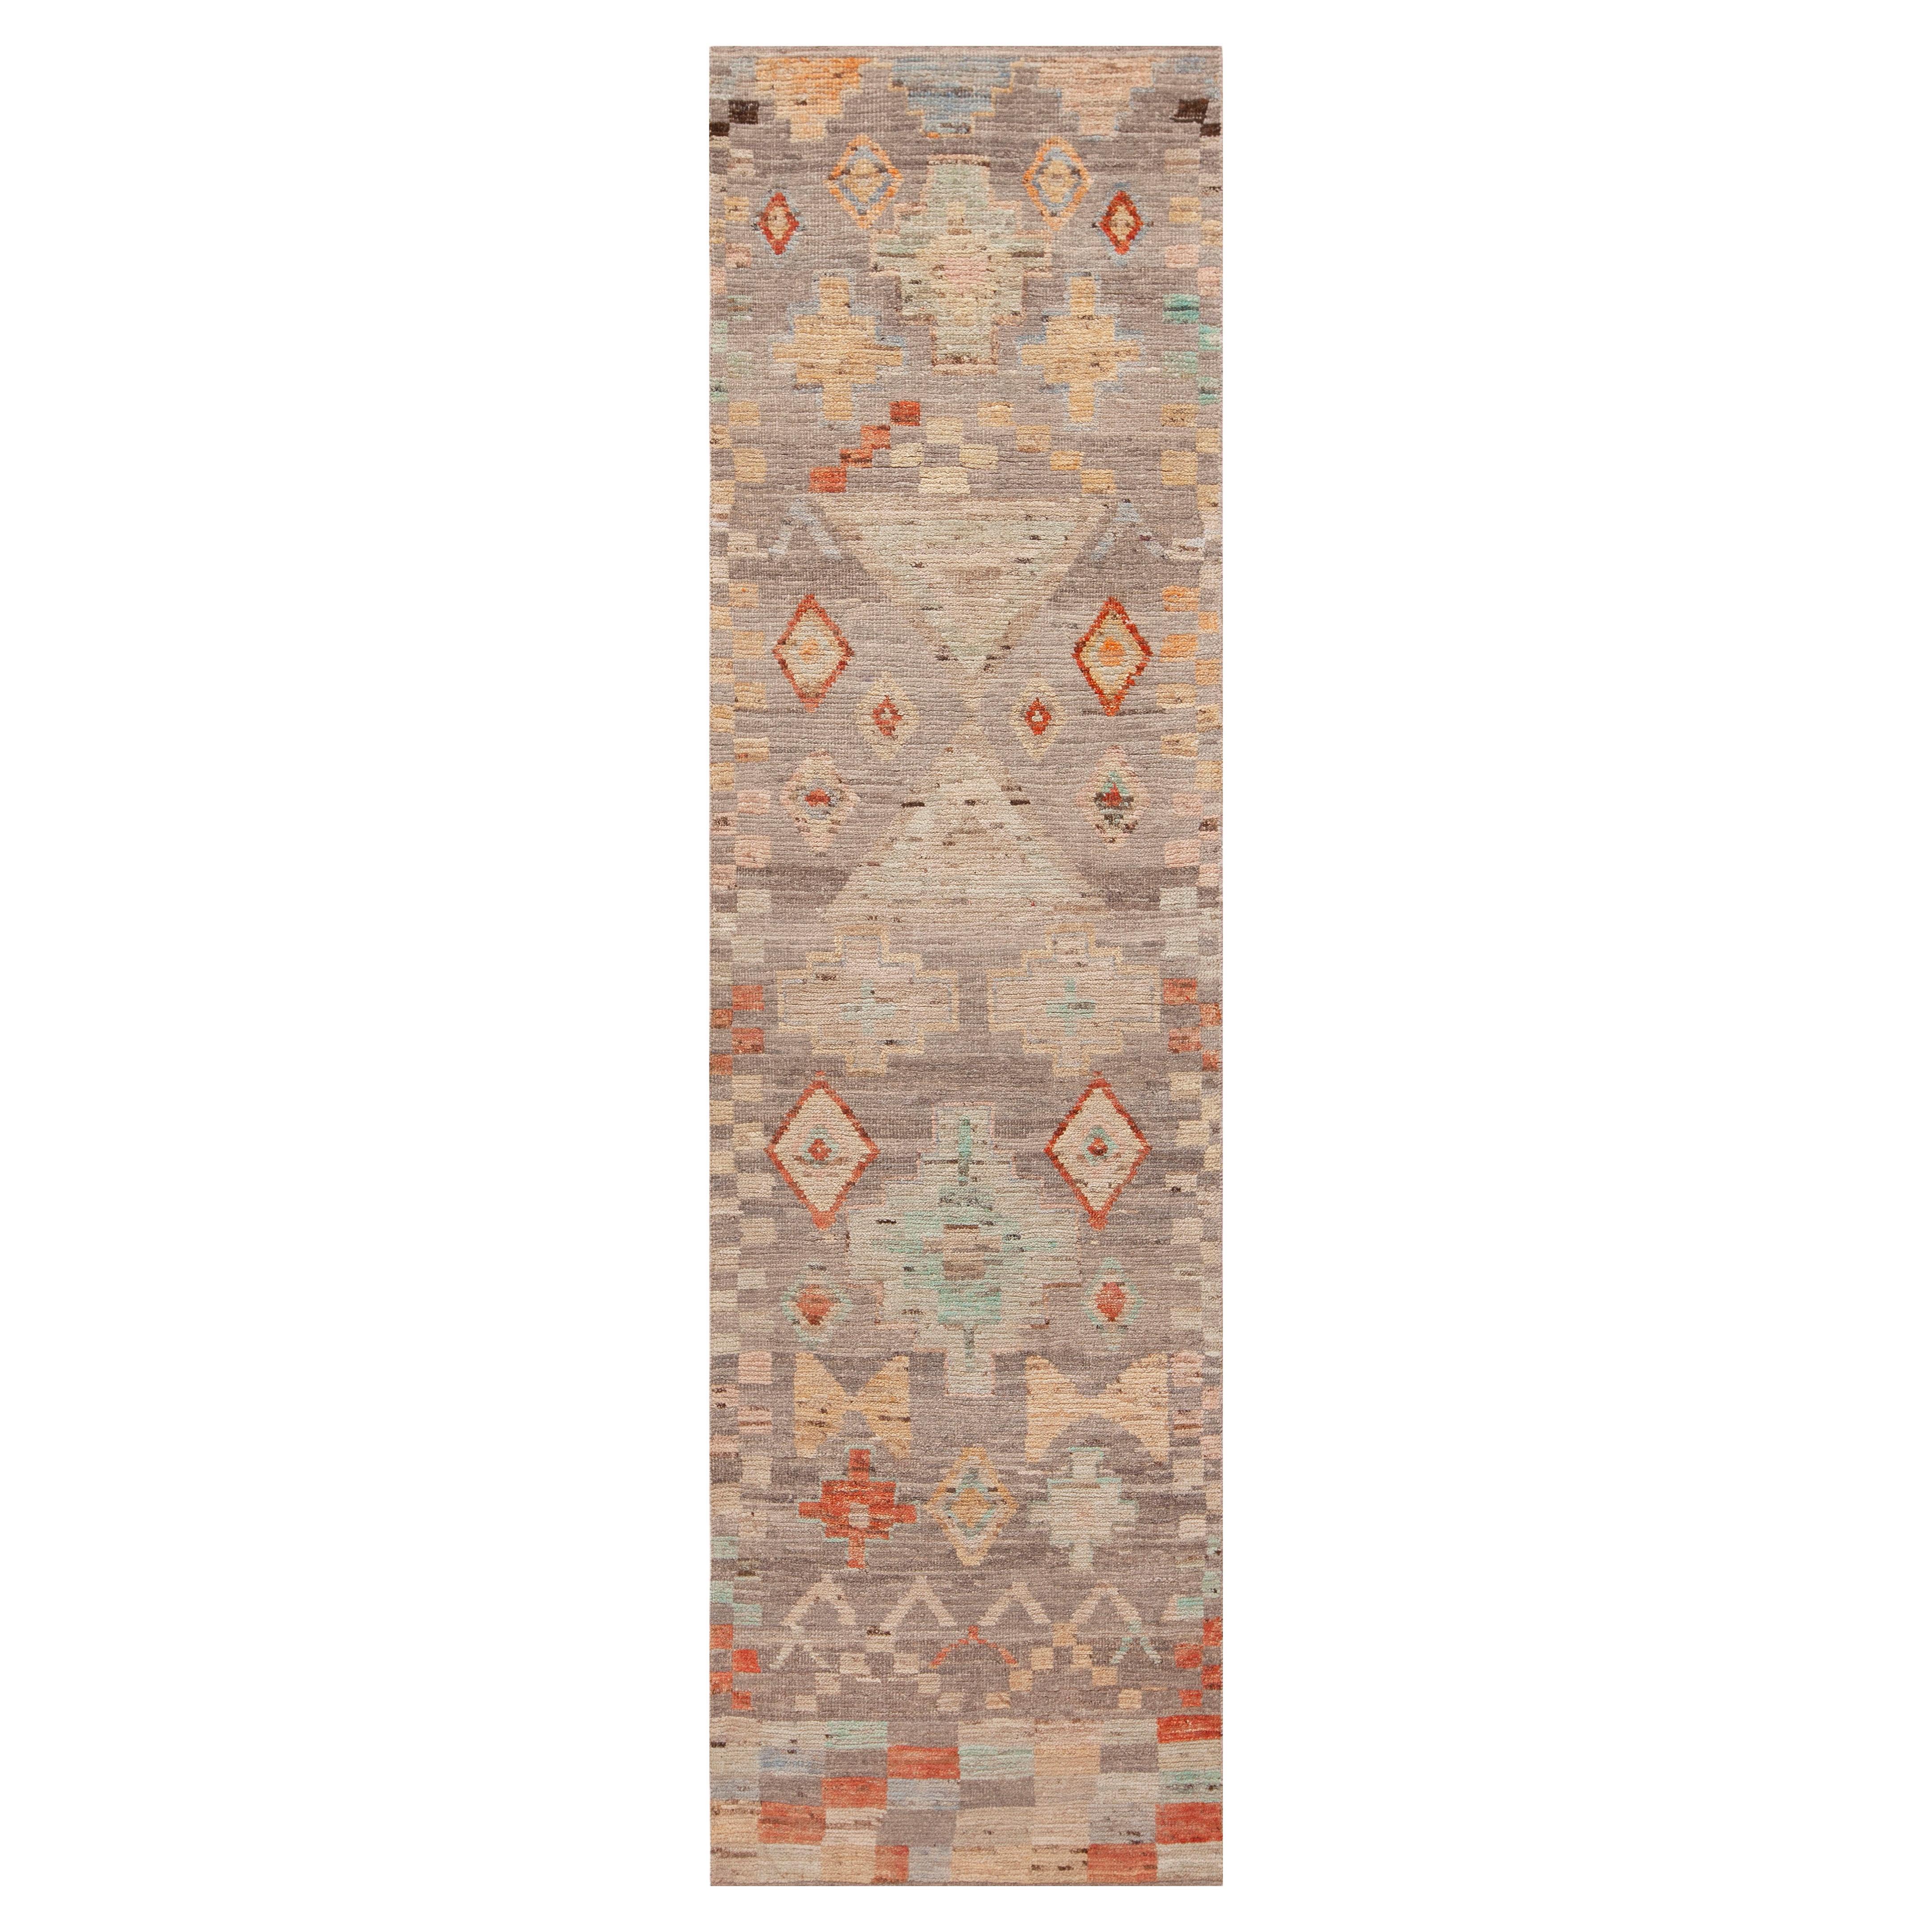 Nazmiyal Collection Rustic Tribal Design Hallway Runner Rug 2'8" x 9'7"